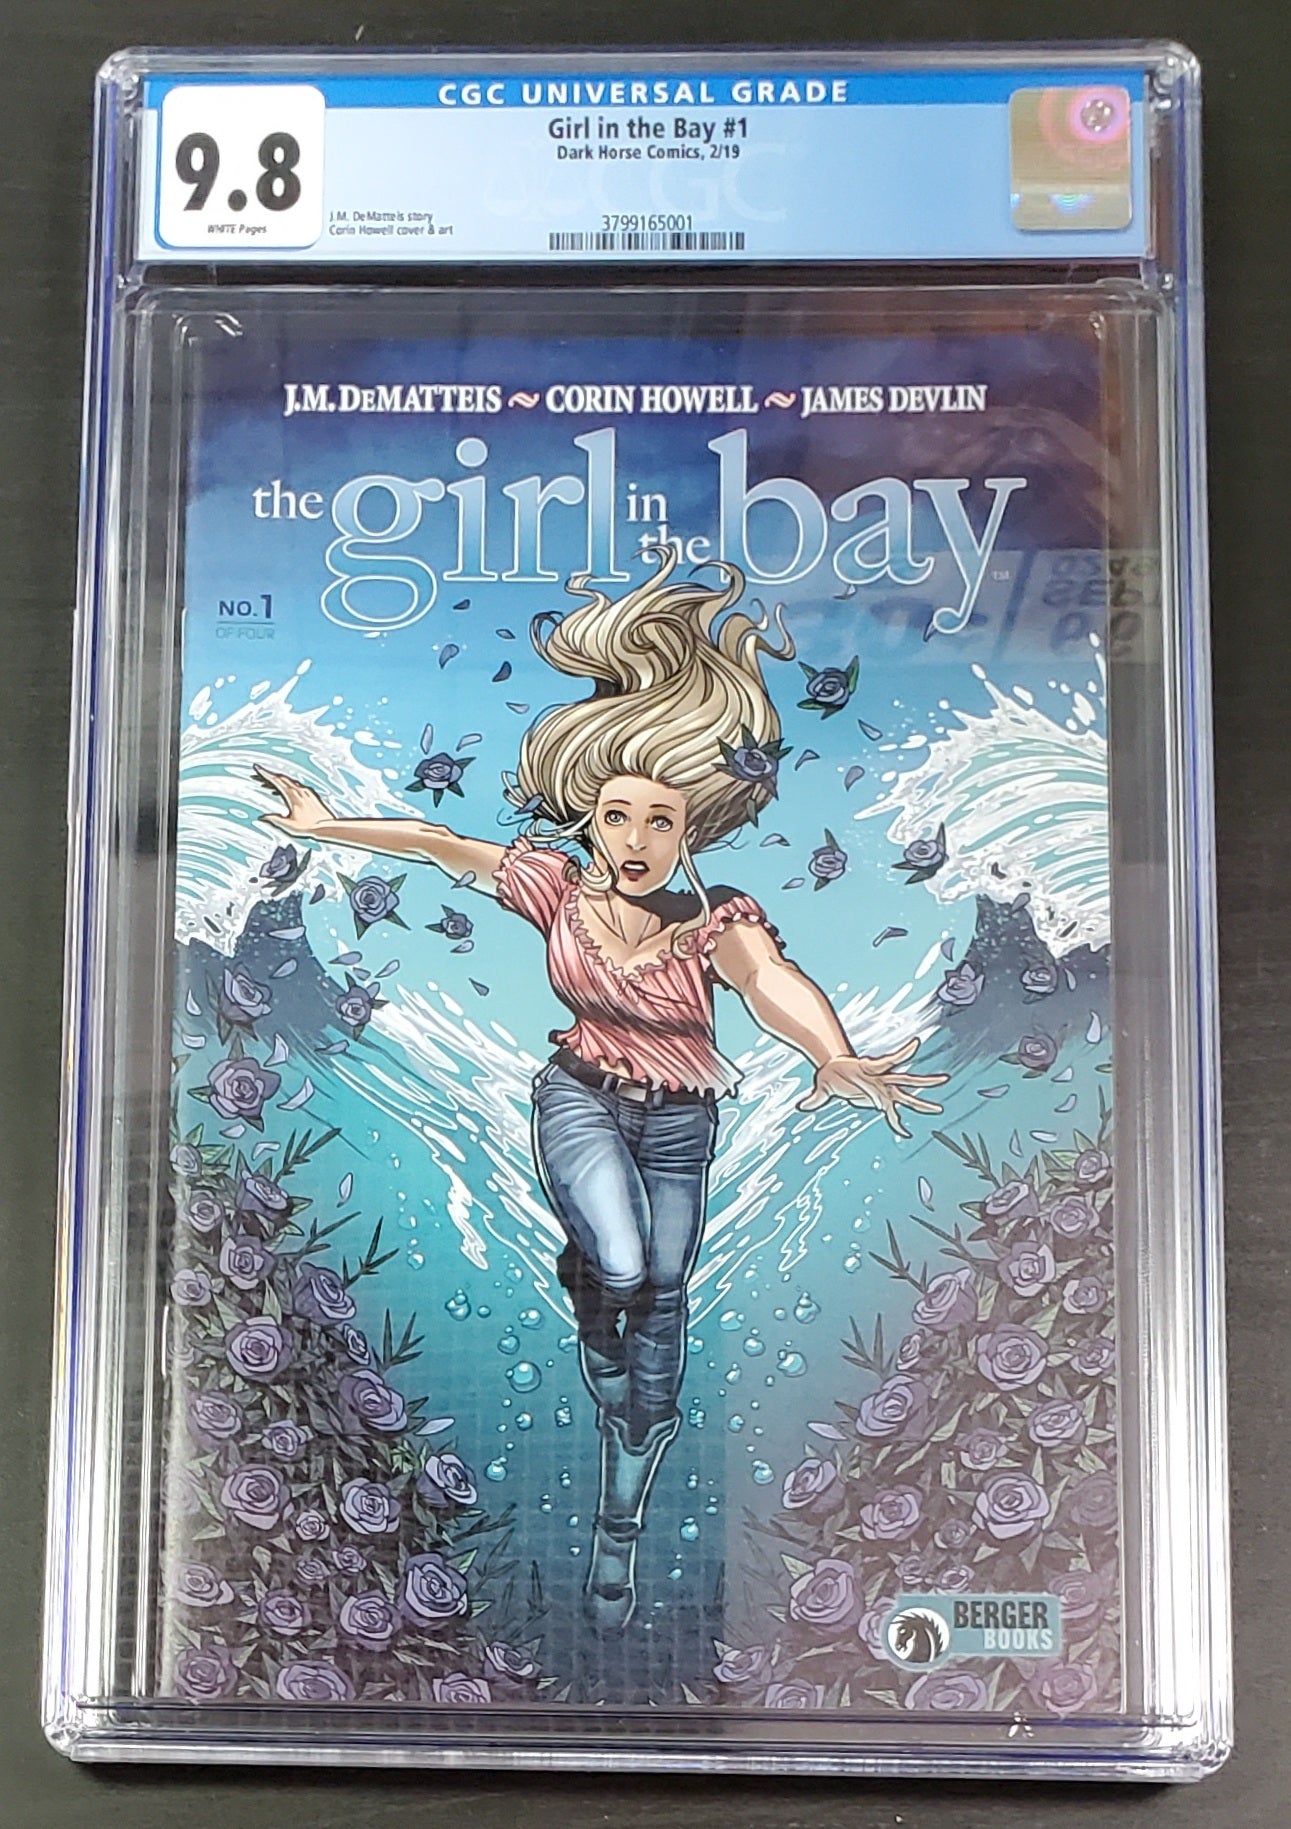 9.8 CGC GIRL IN THE BAY #1 [3799165001]